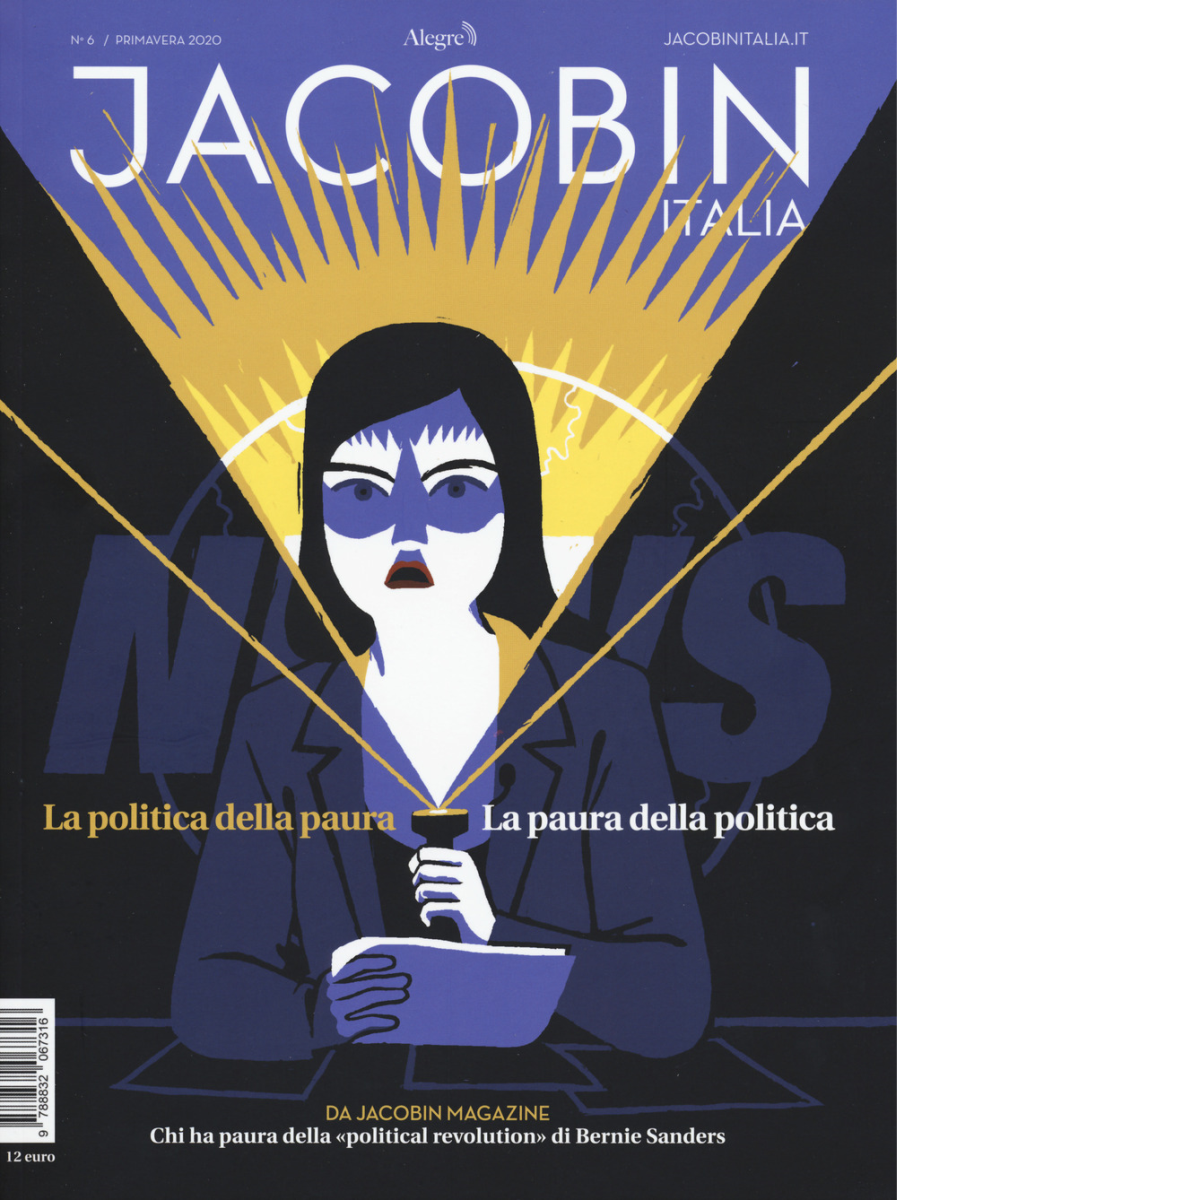 n.6 JACOBIN ITALIA - aa.vv. - edizioni alegre, 2019